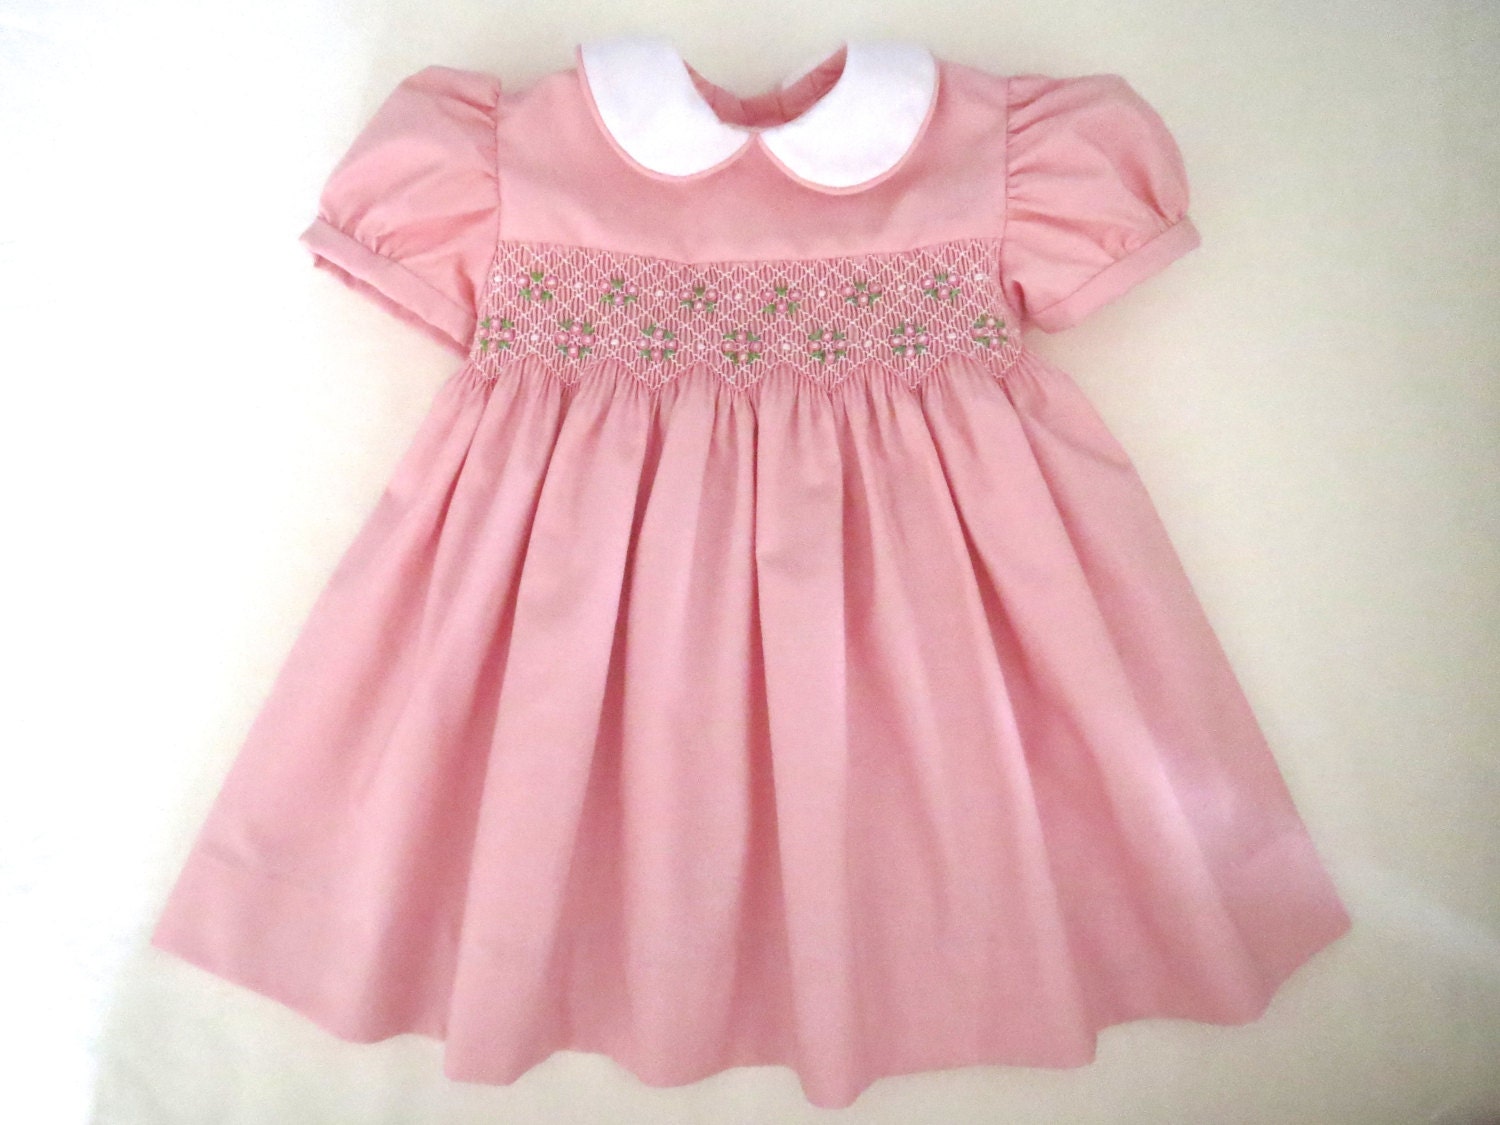 Lovely Light Pink and White Hand Smocked Dress for Baby Girl.